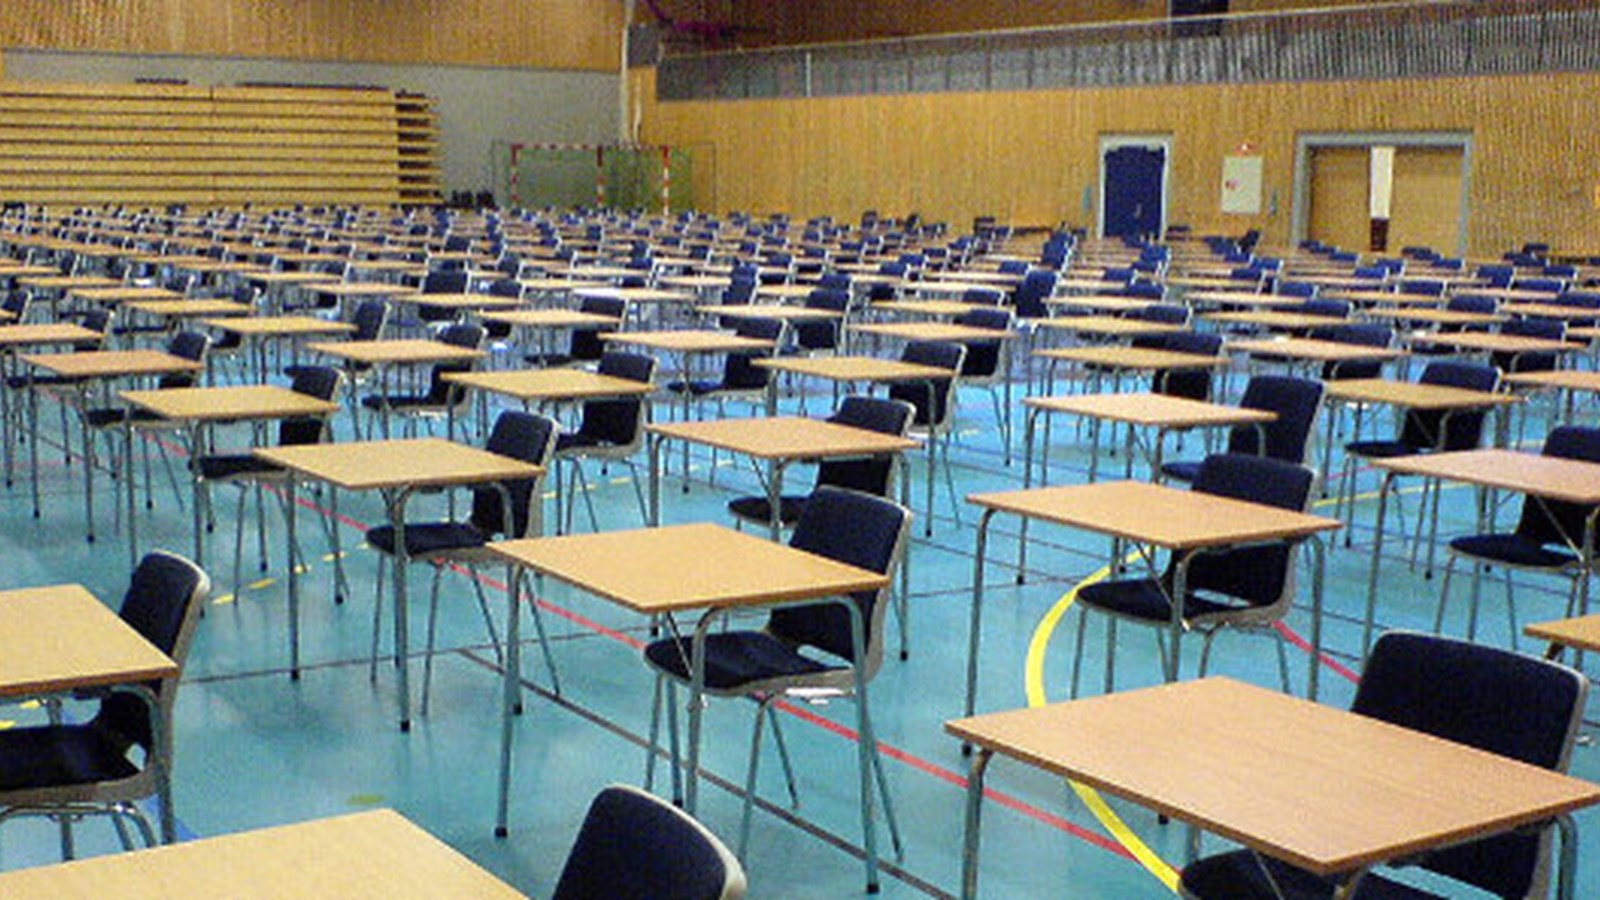 Exam hall image Feb 19.jpg